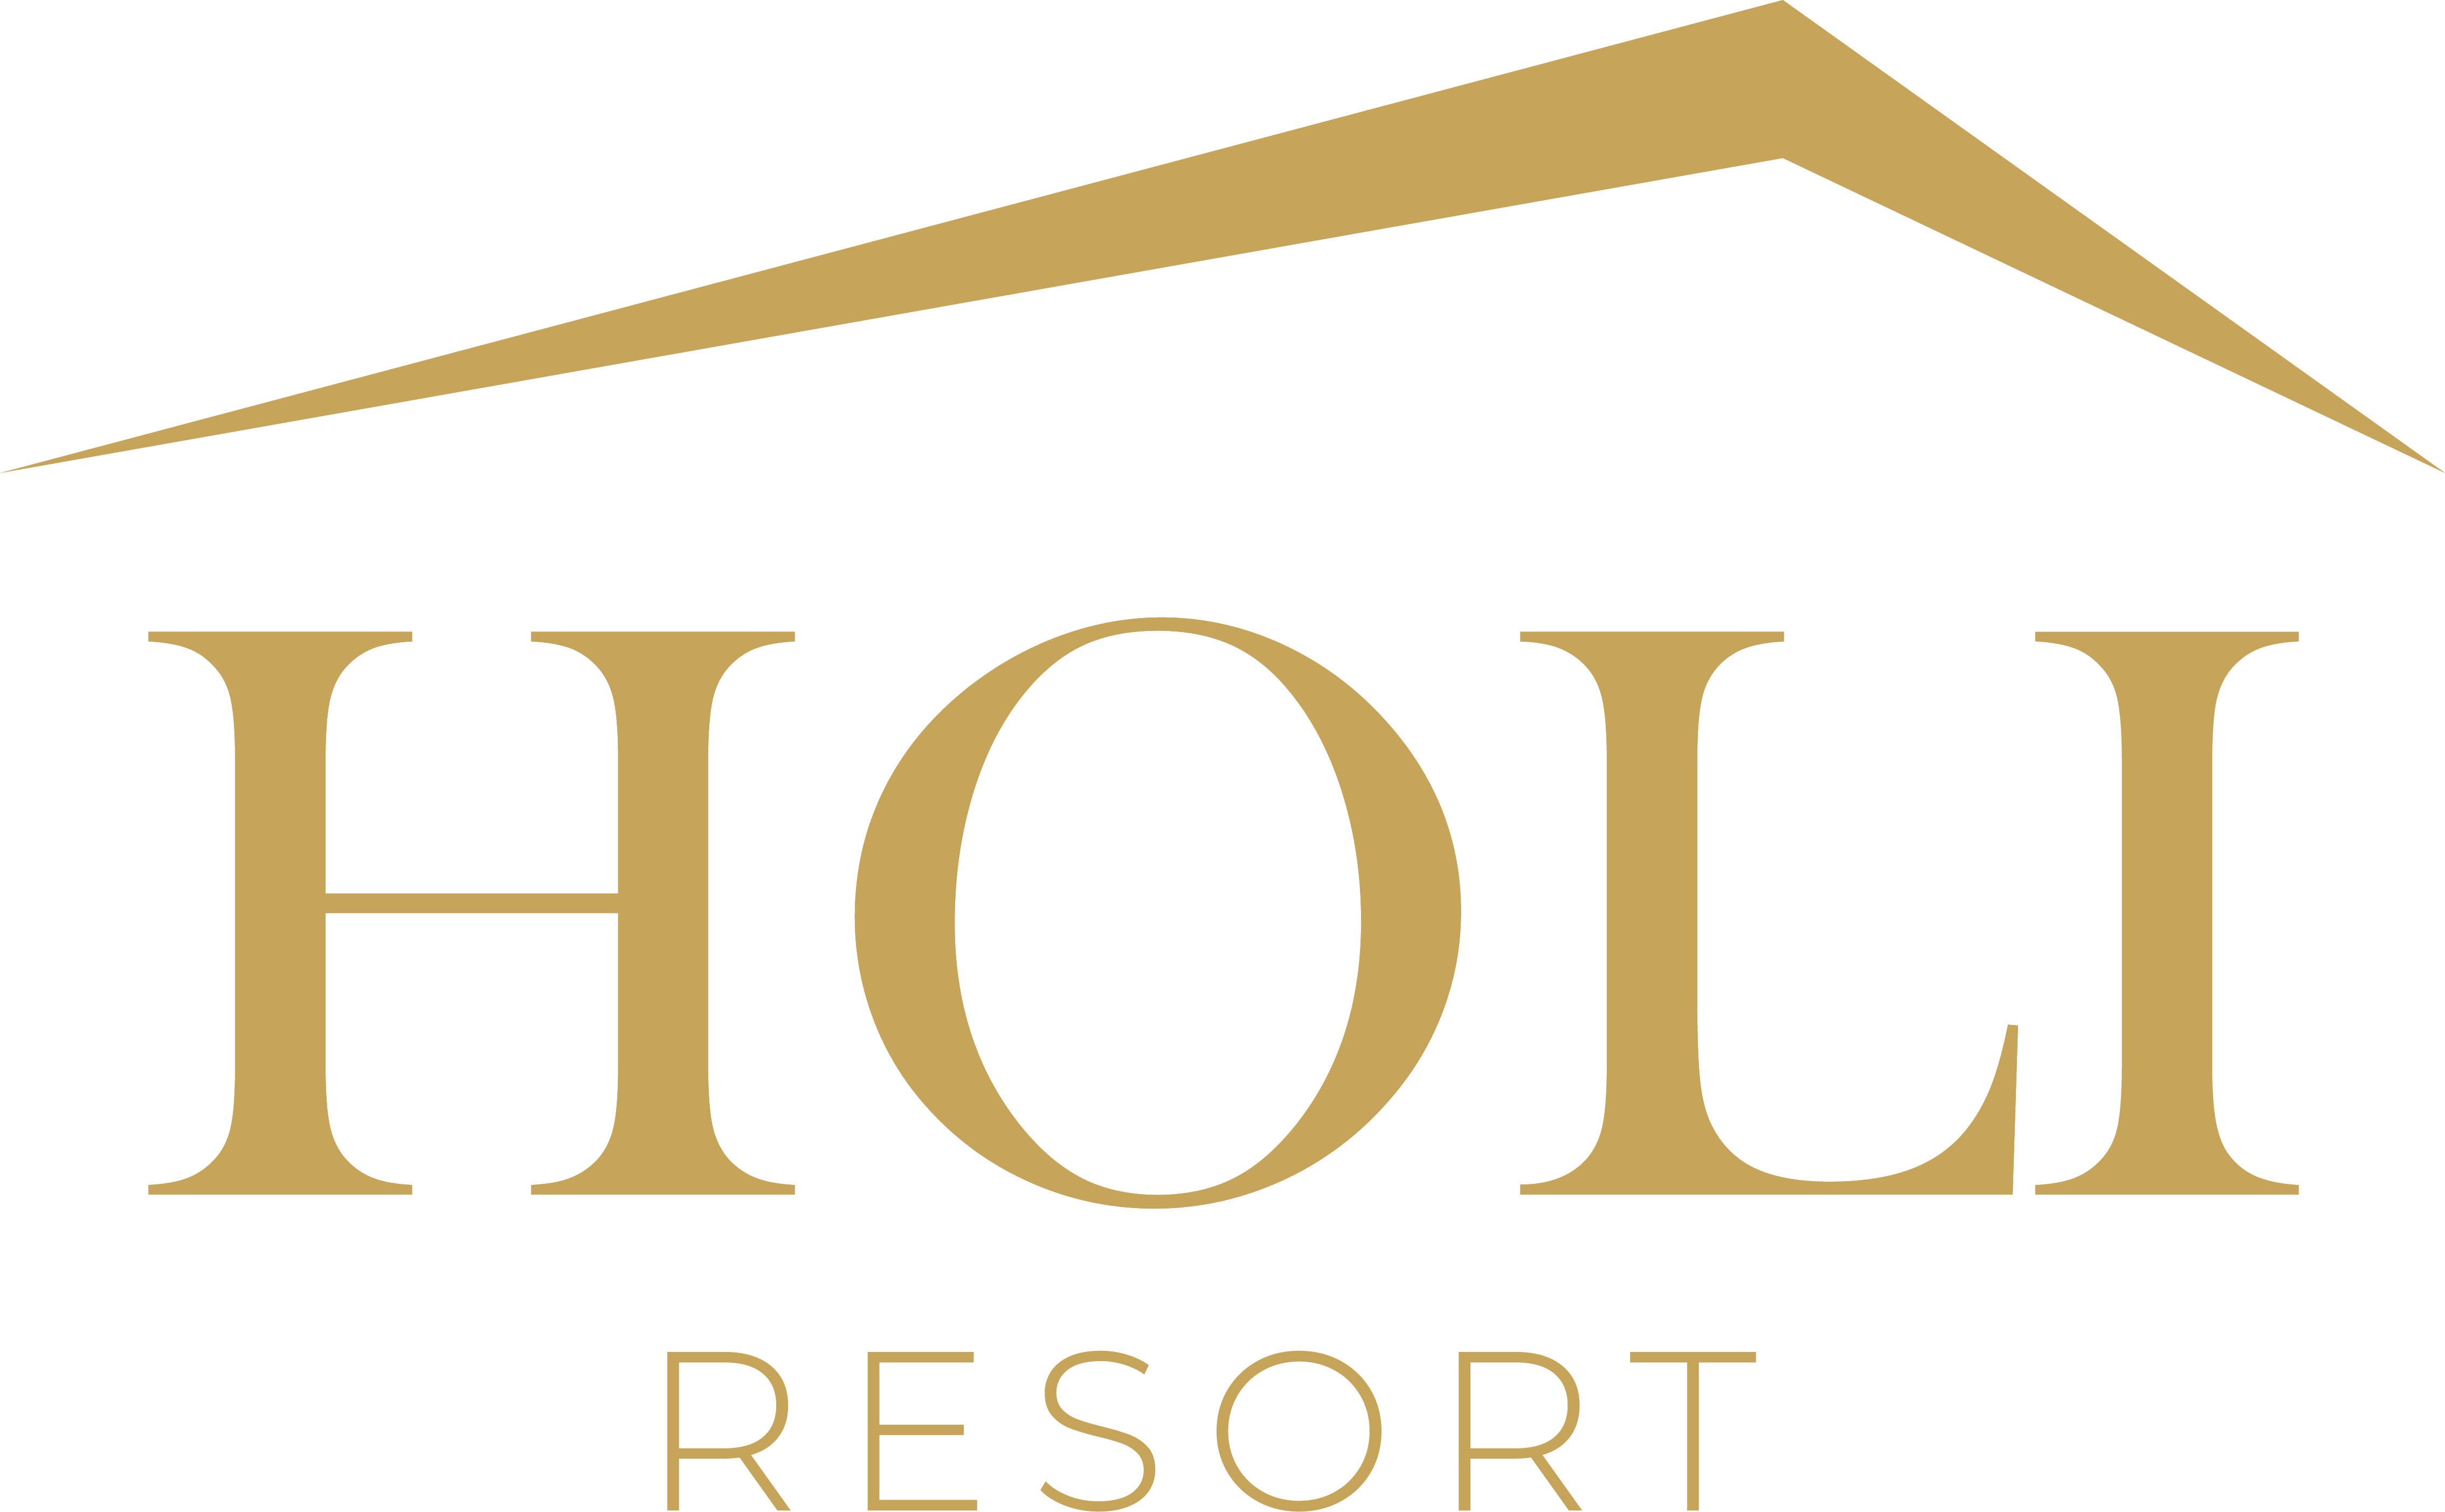 Holi Resort